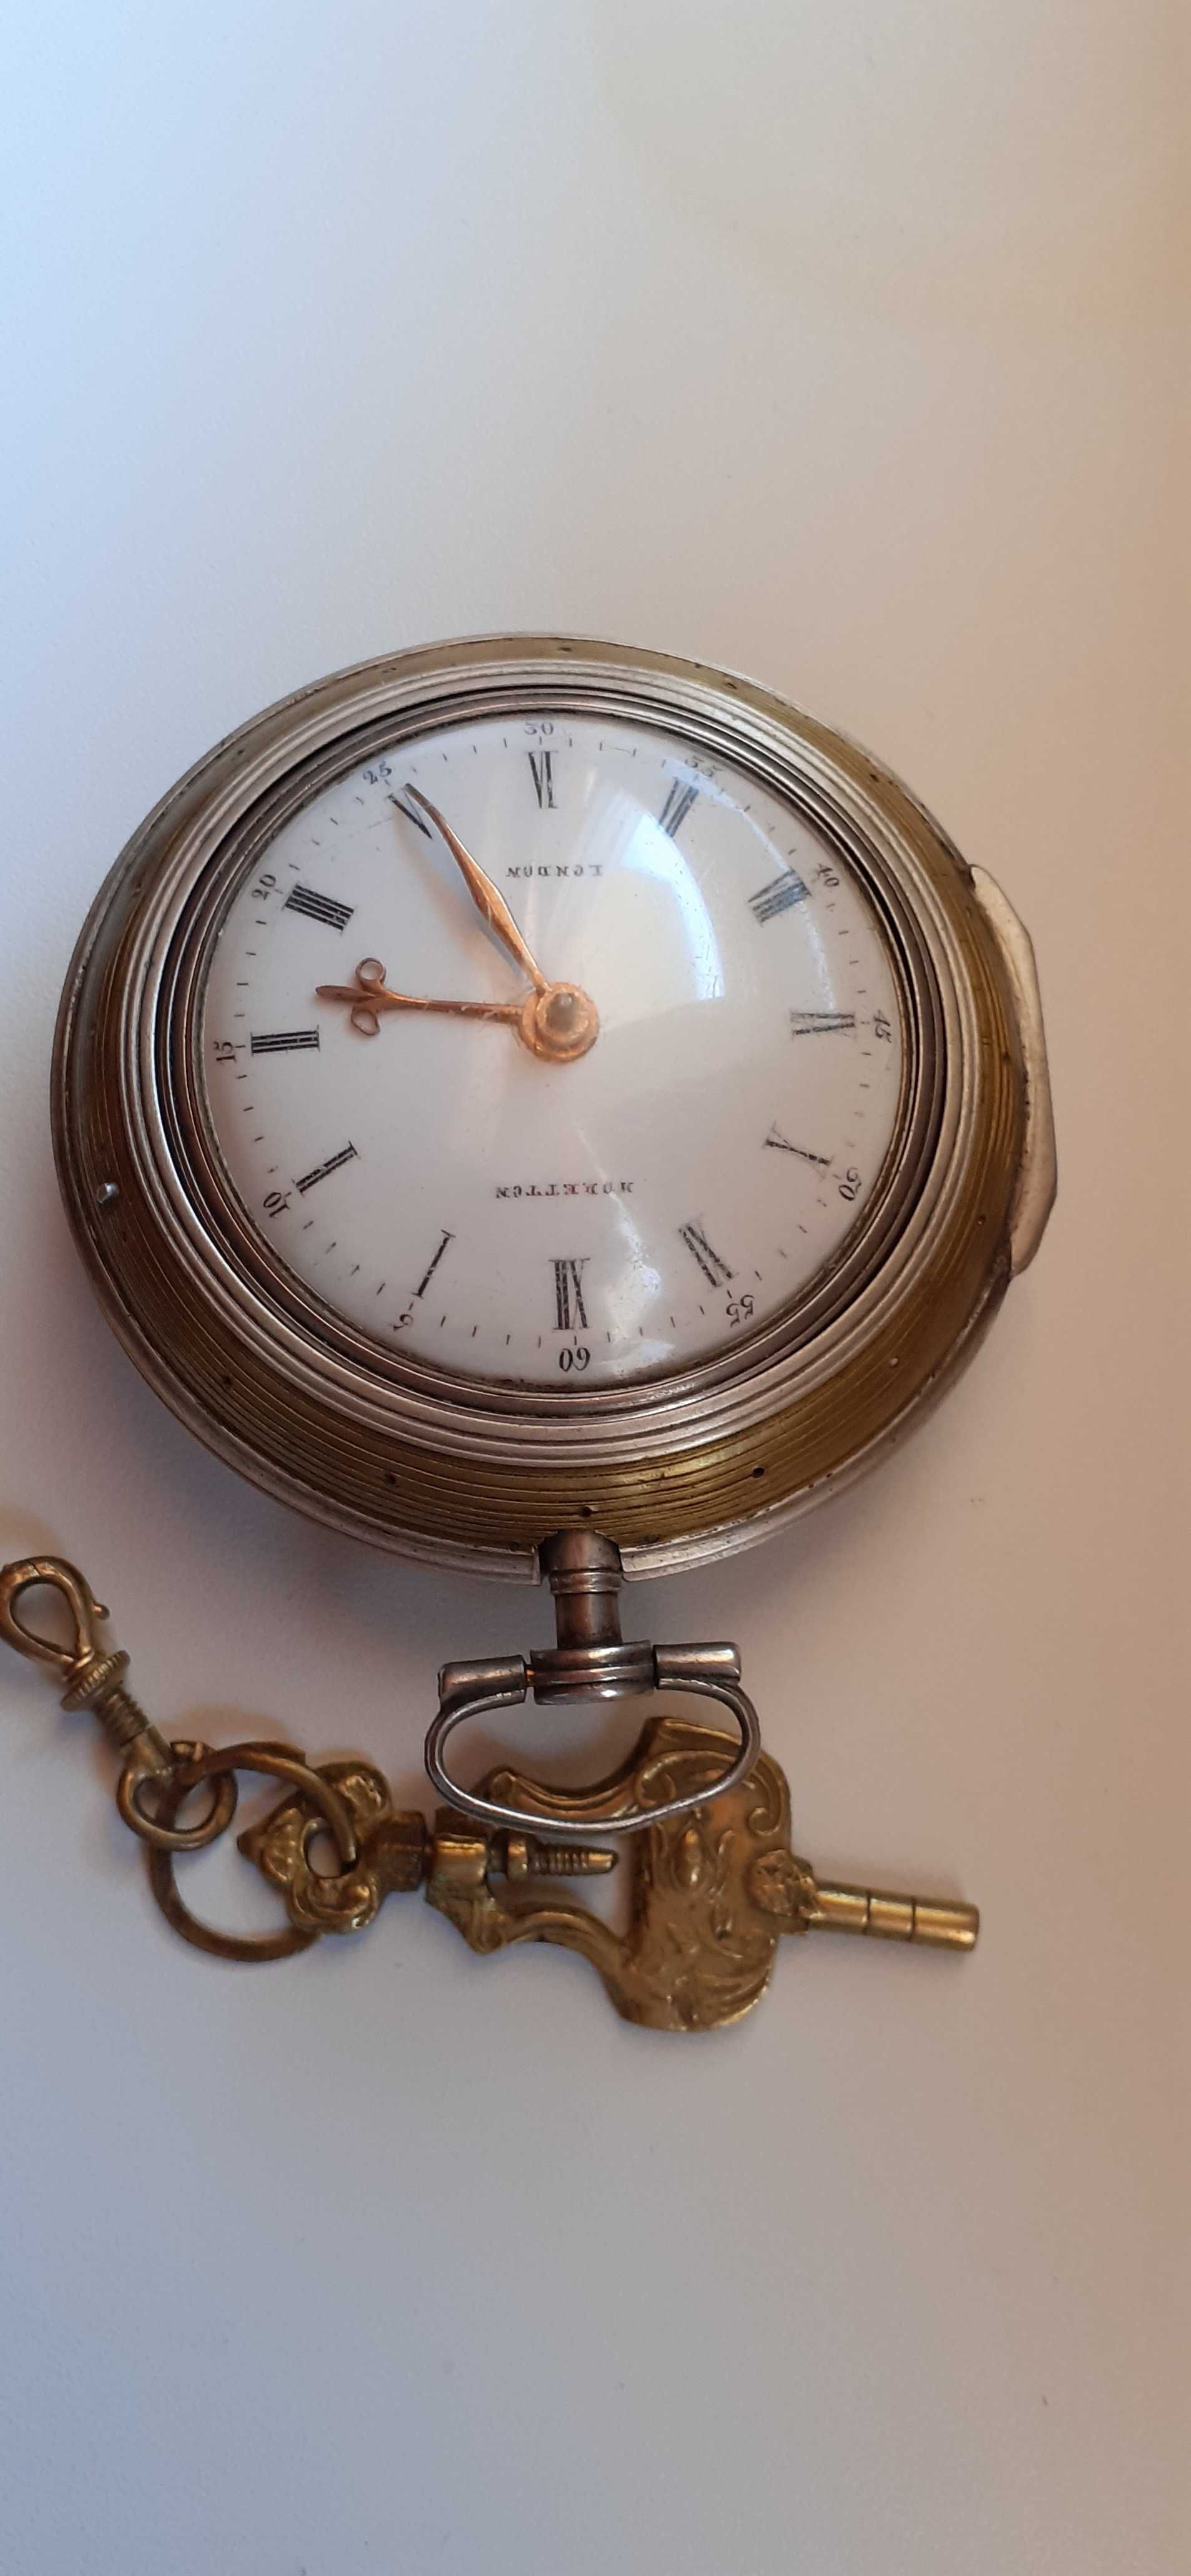 Zegarek kieszonkowy-dewizka srebro MORETTON LONDON ok. 1700 r.